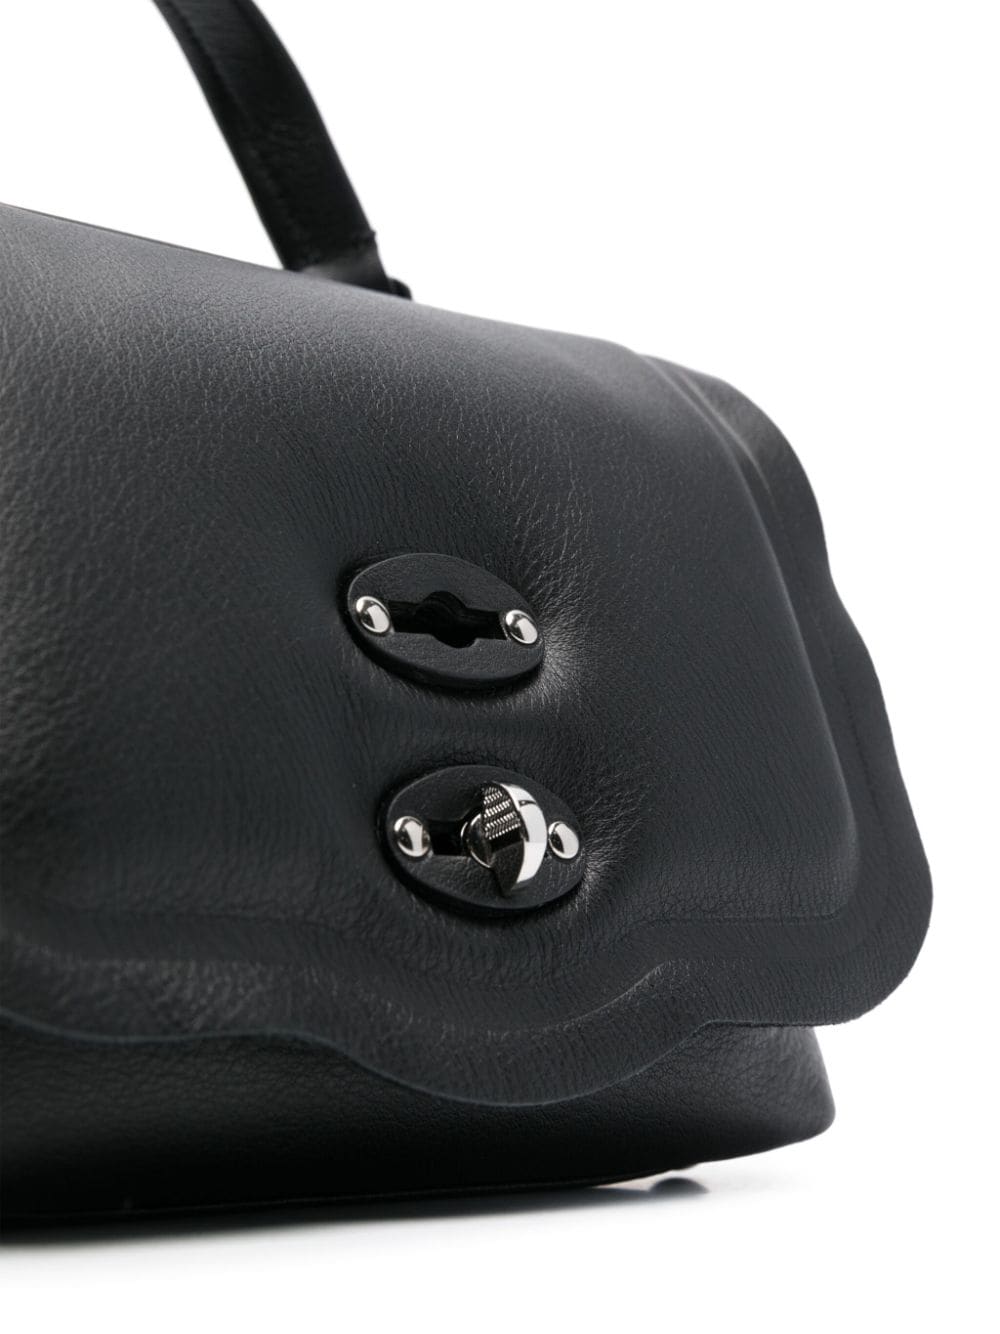 Zanellato ZANELLATO- Baby Postina Leather Handbag